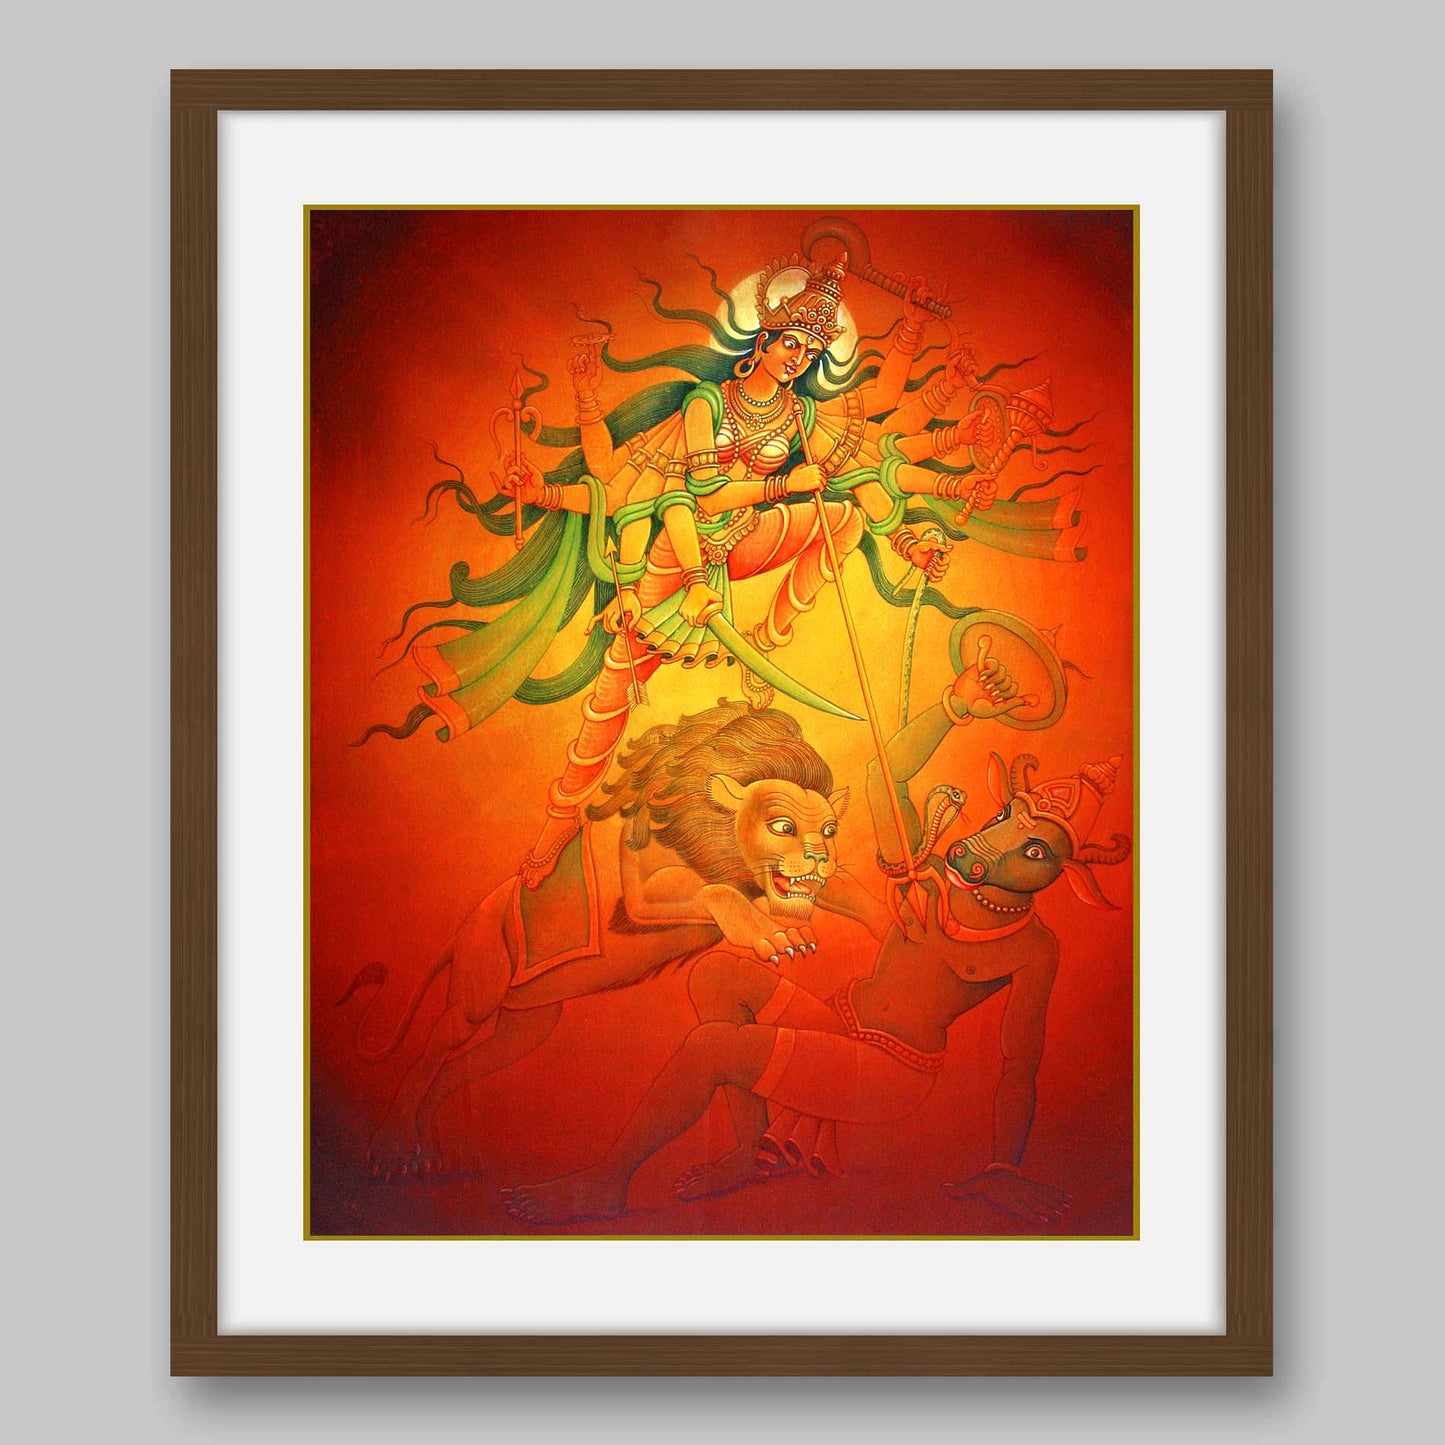 Durga - High Quality Print of Artwork by Pieter Weltevrede